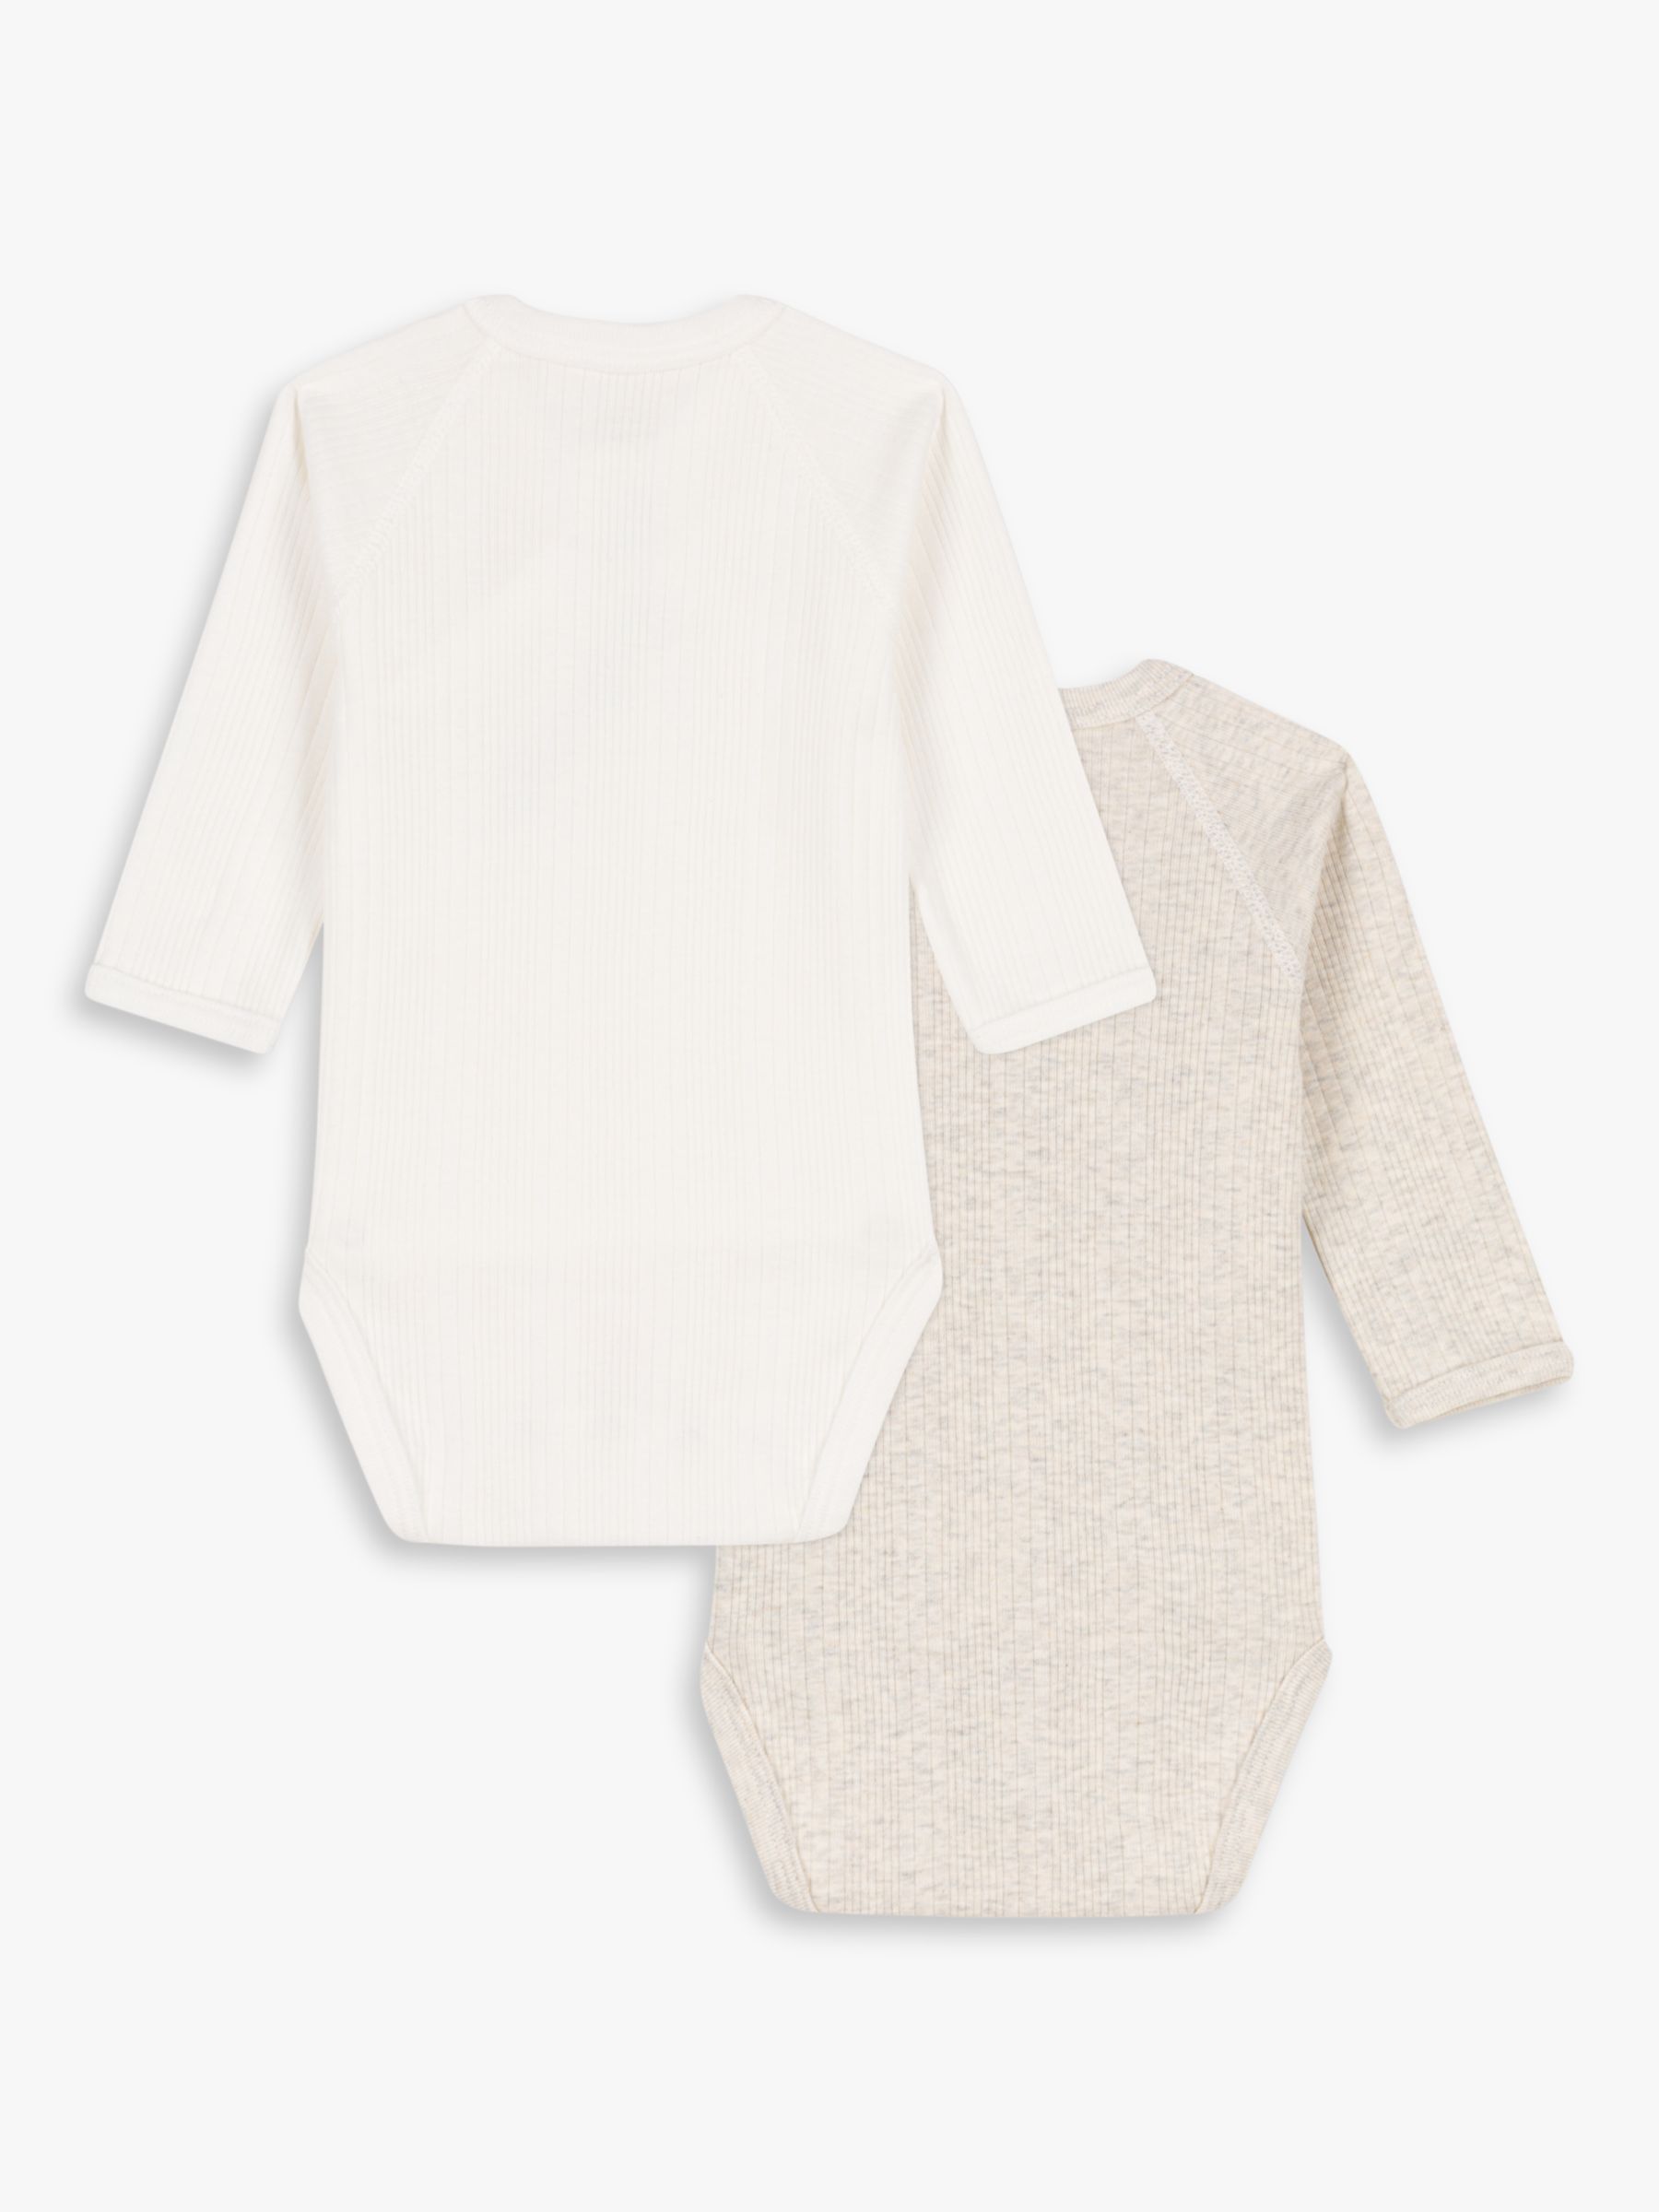 Buy Petit Bateau Baby Ribbed Long Sleeve Bodysuit, Pack of 2, White/Cream Online at johnlewis.com